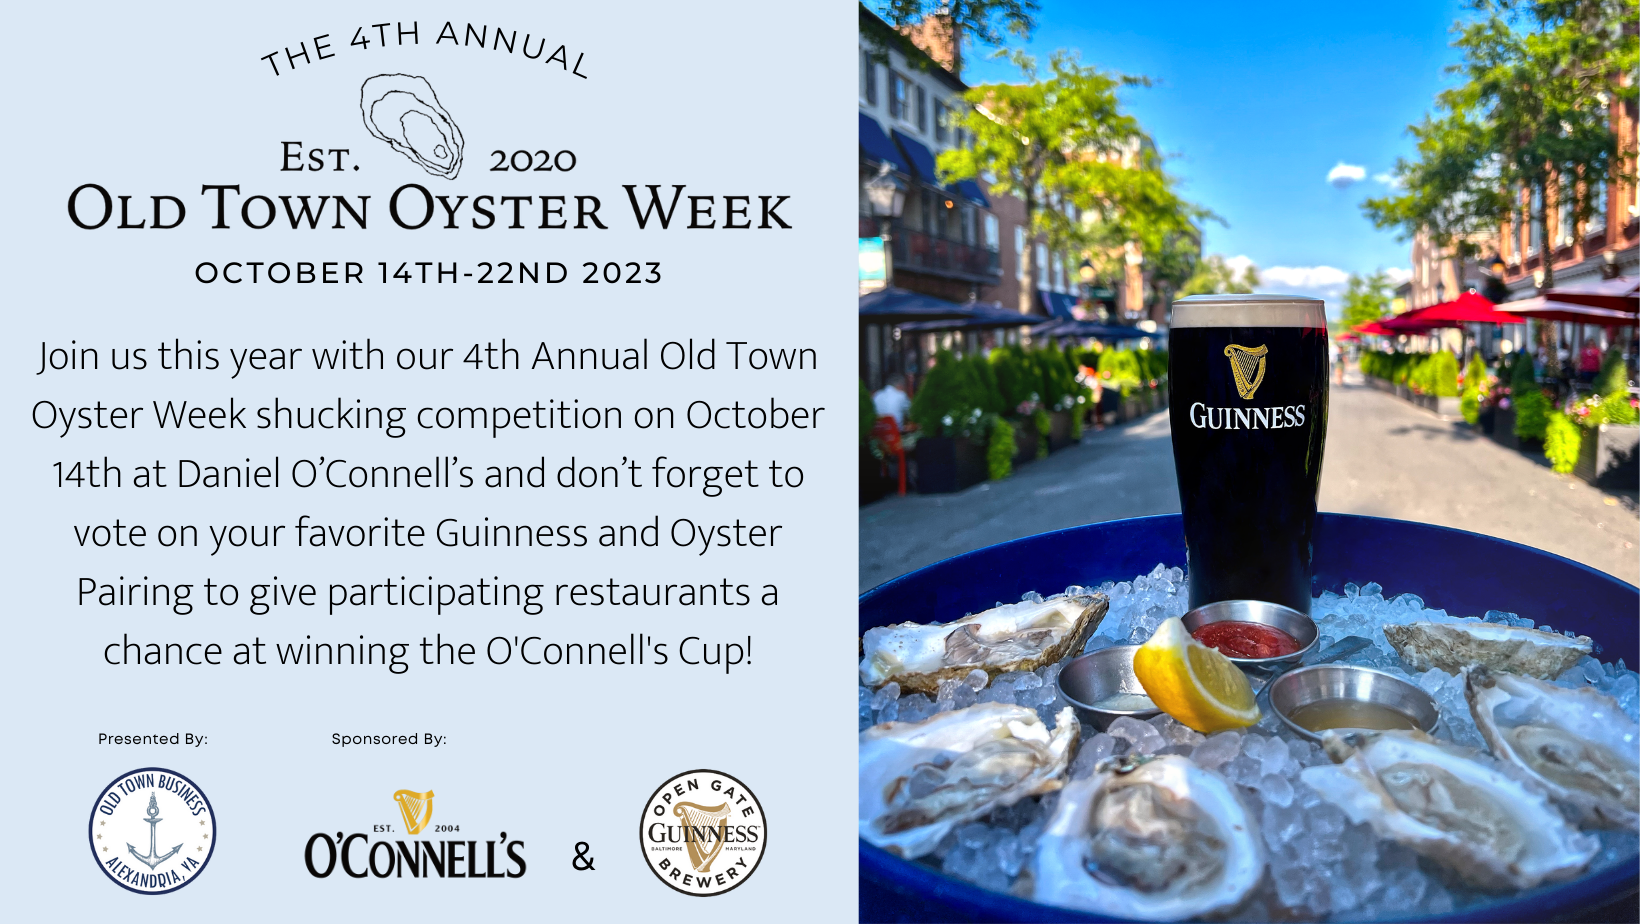 https://www.oldtownbusiness.org/old-town-oyster-week/